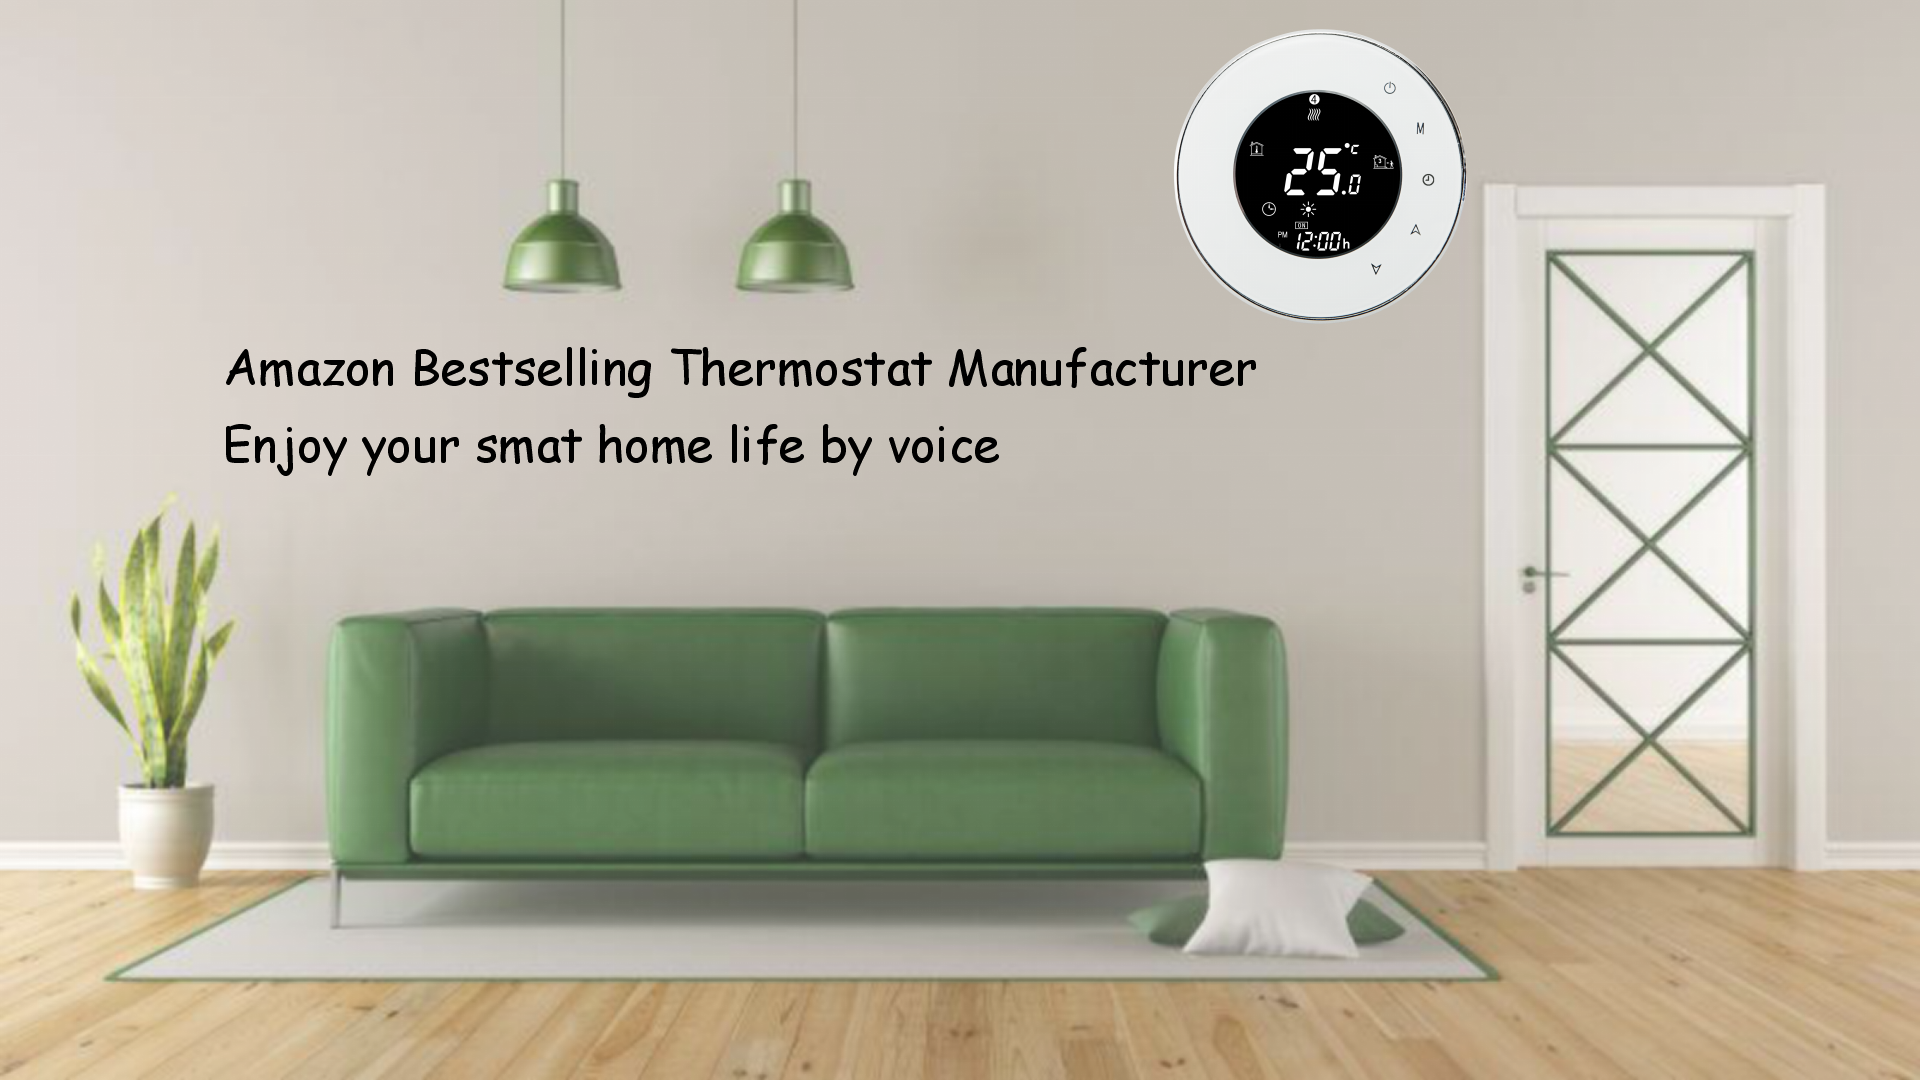 BECA BHT-6000 Zwave Water Heating/Water Boiler/Gas Boiler/Electric Heating Room Thermostat-Xiamen Beca Energysaving Technology